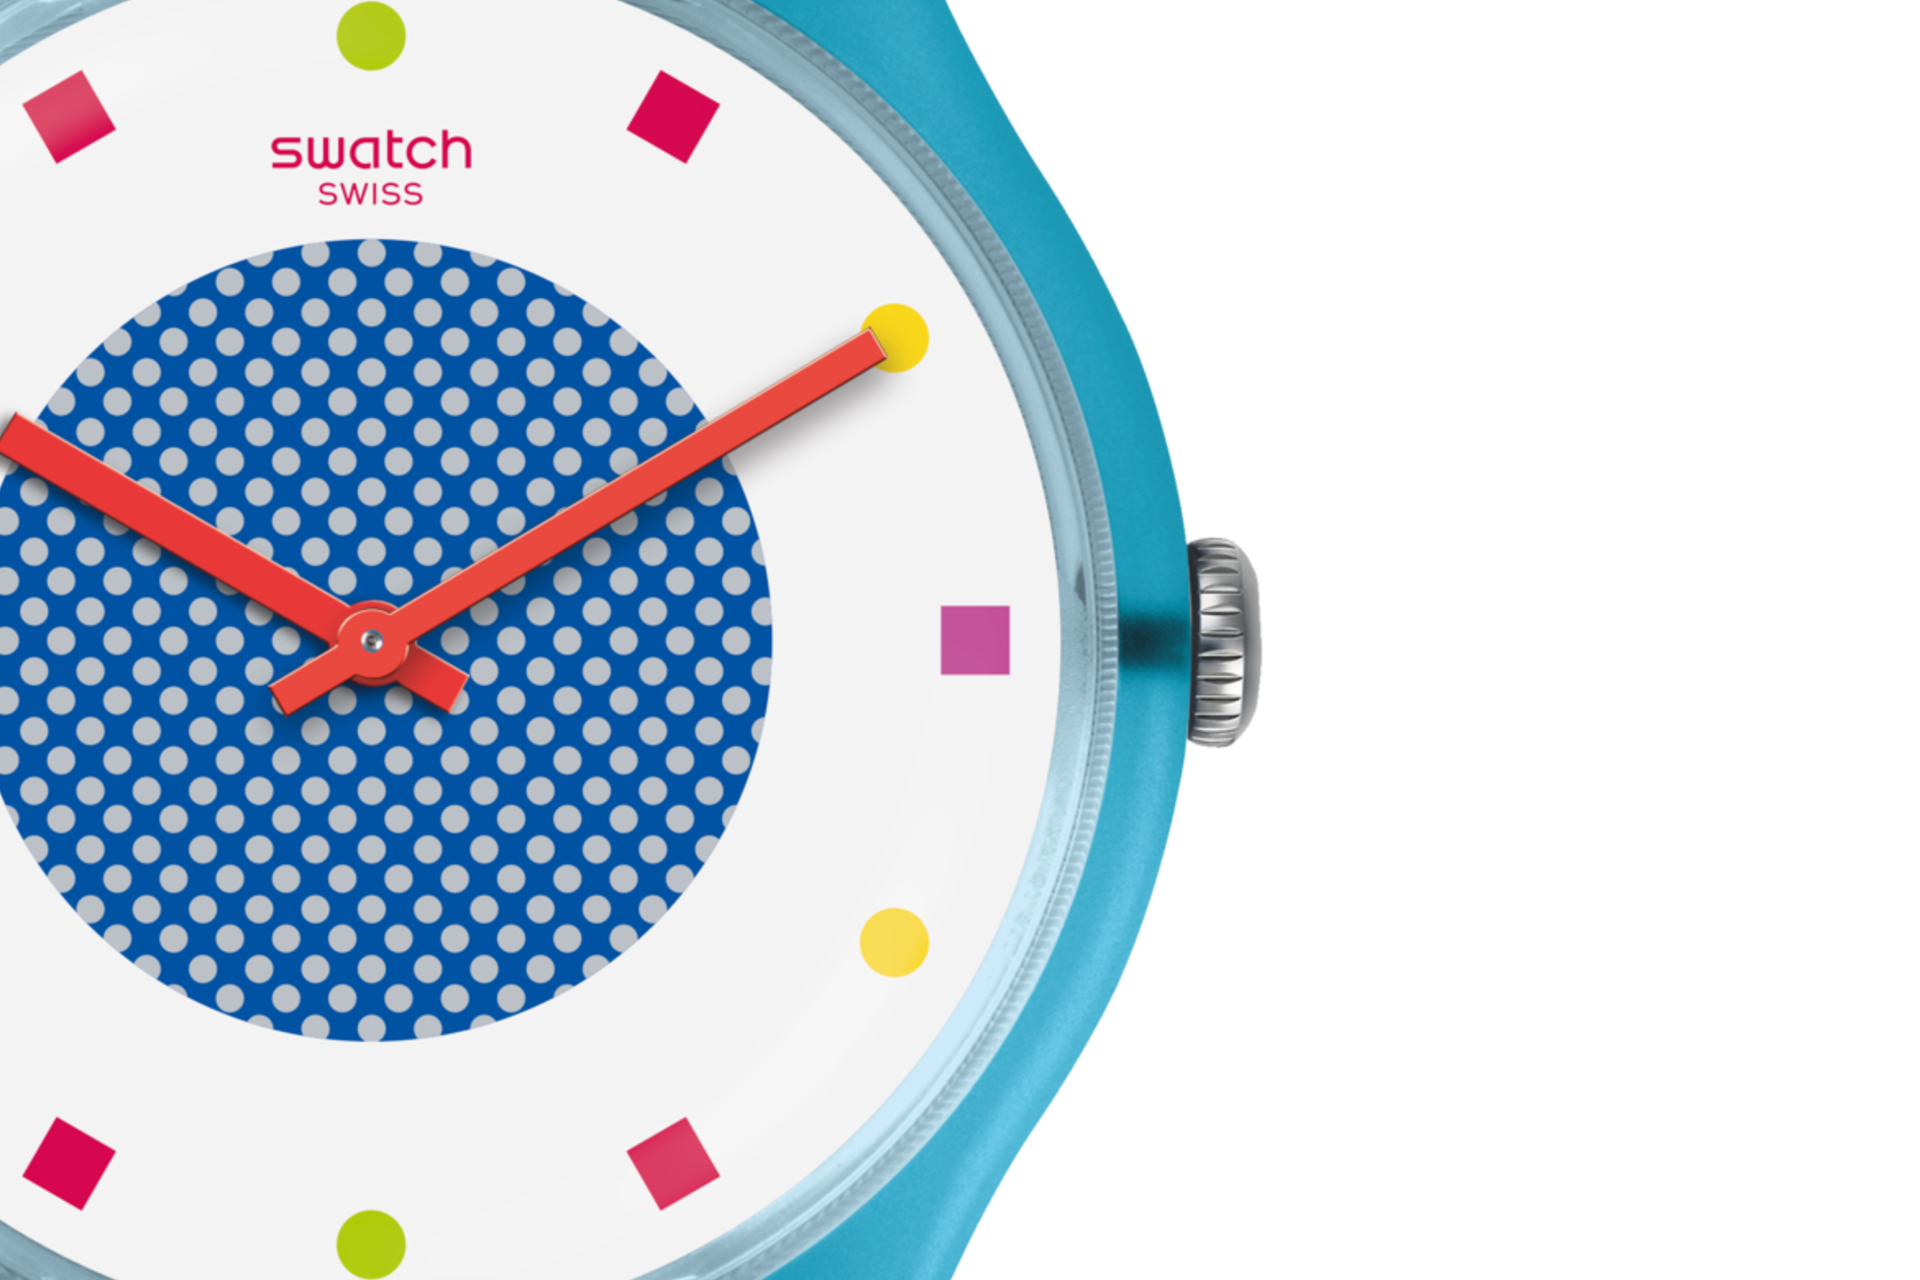 Reloj Swatch Mujer New Gent Quilted Time SUOS108 - Joyería de Moda